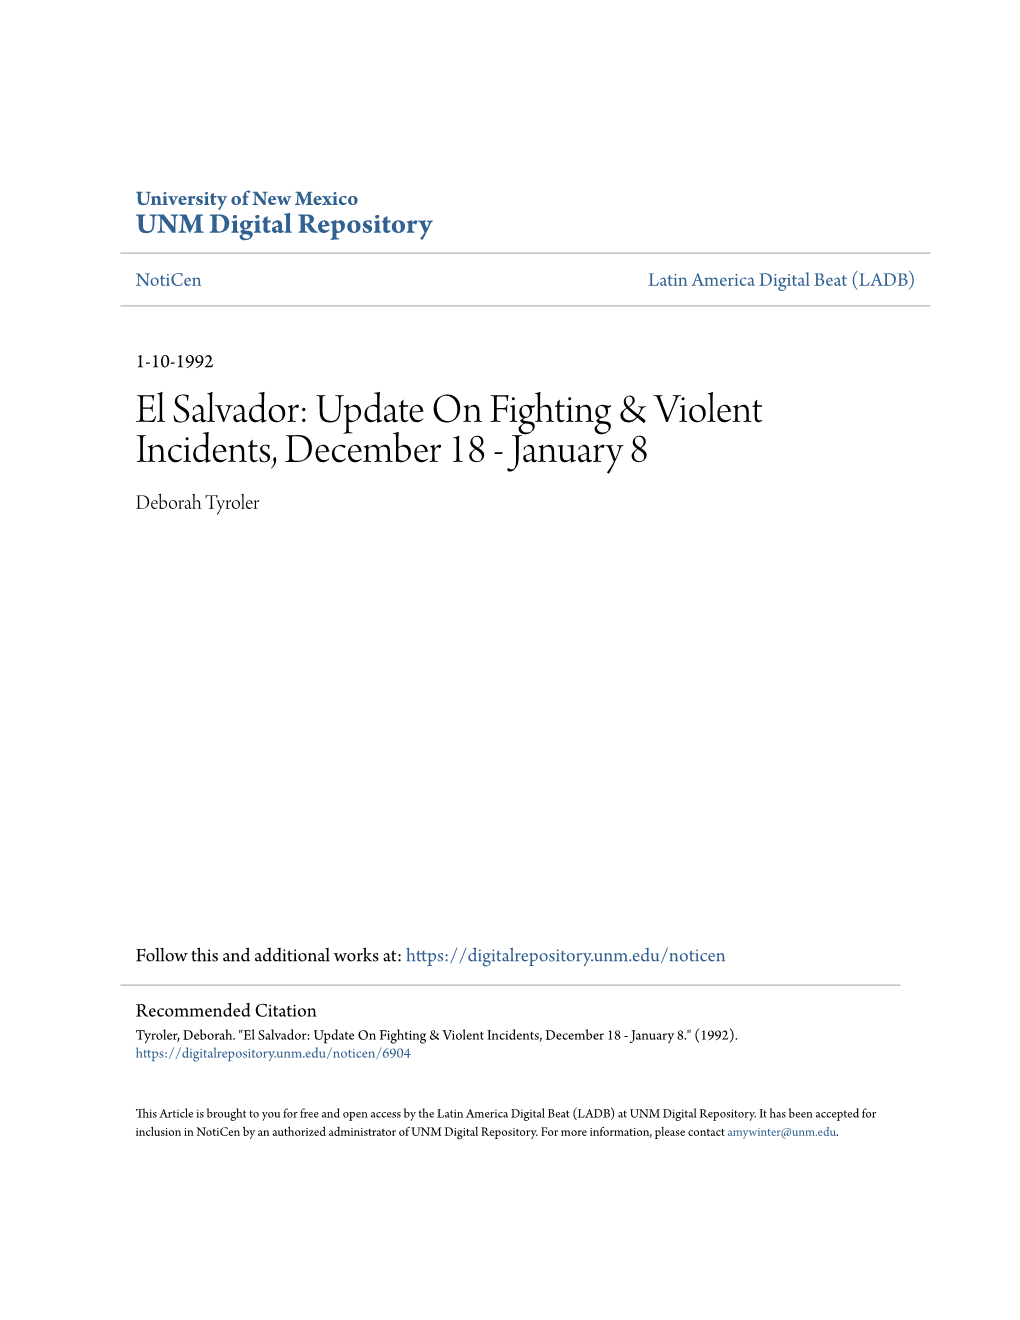 El Salvador: Update on Fighting & Violent Incidents, December 18 - January 8 Deborah Tyroler